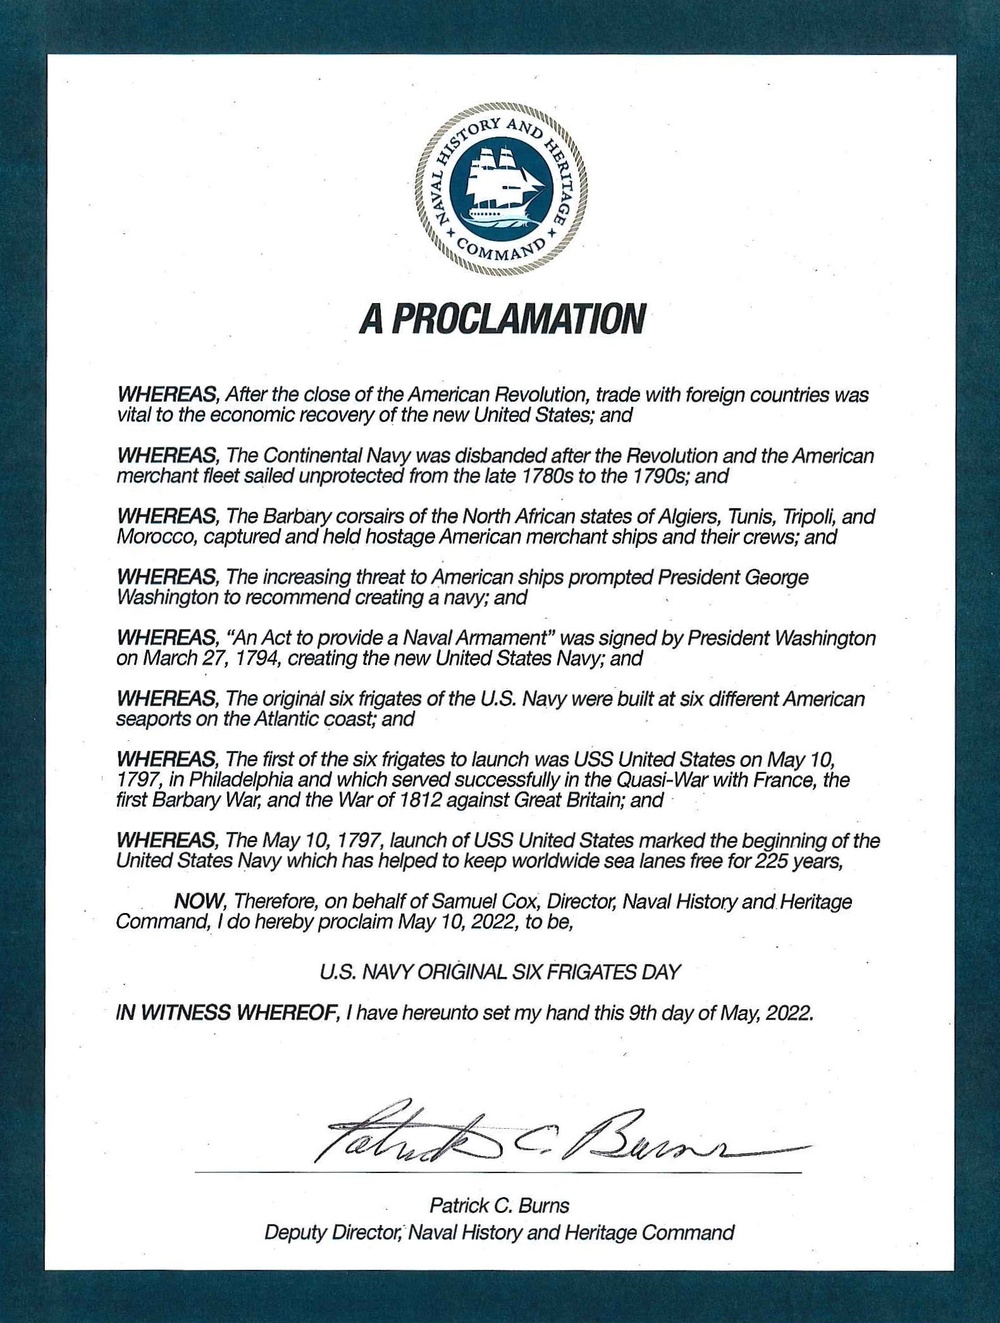 NHHC Proclamation: ‘U.S. Navy Original Six Frigates Day’